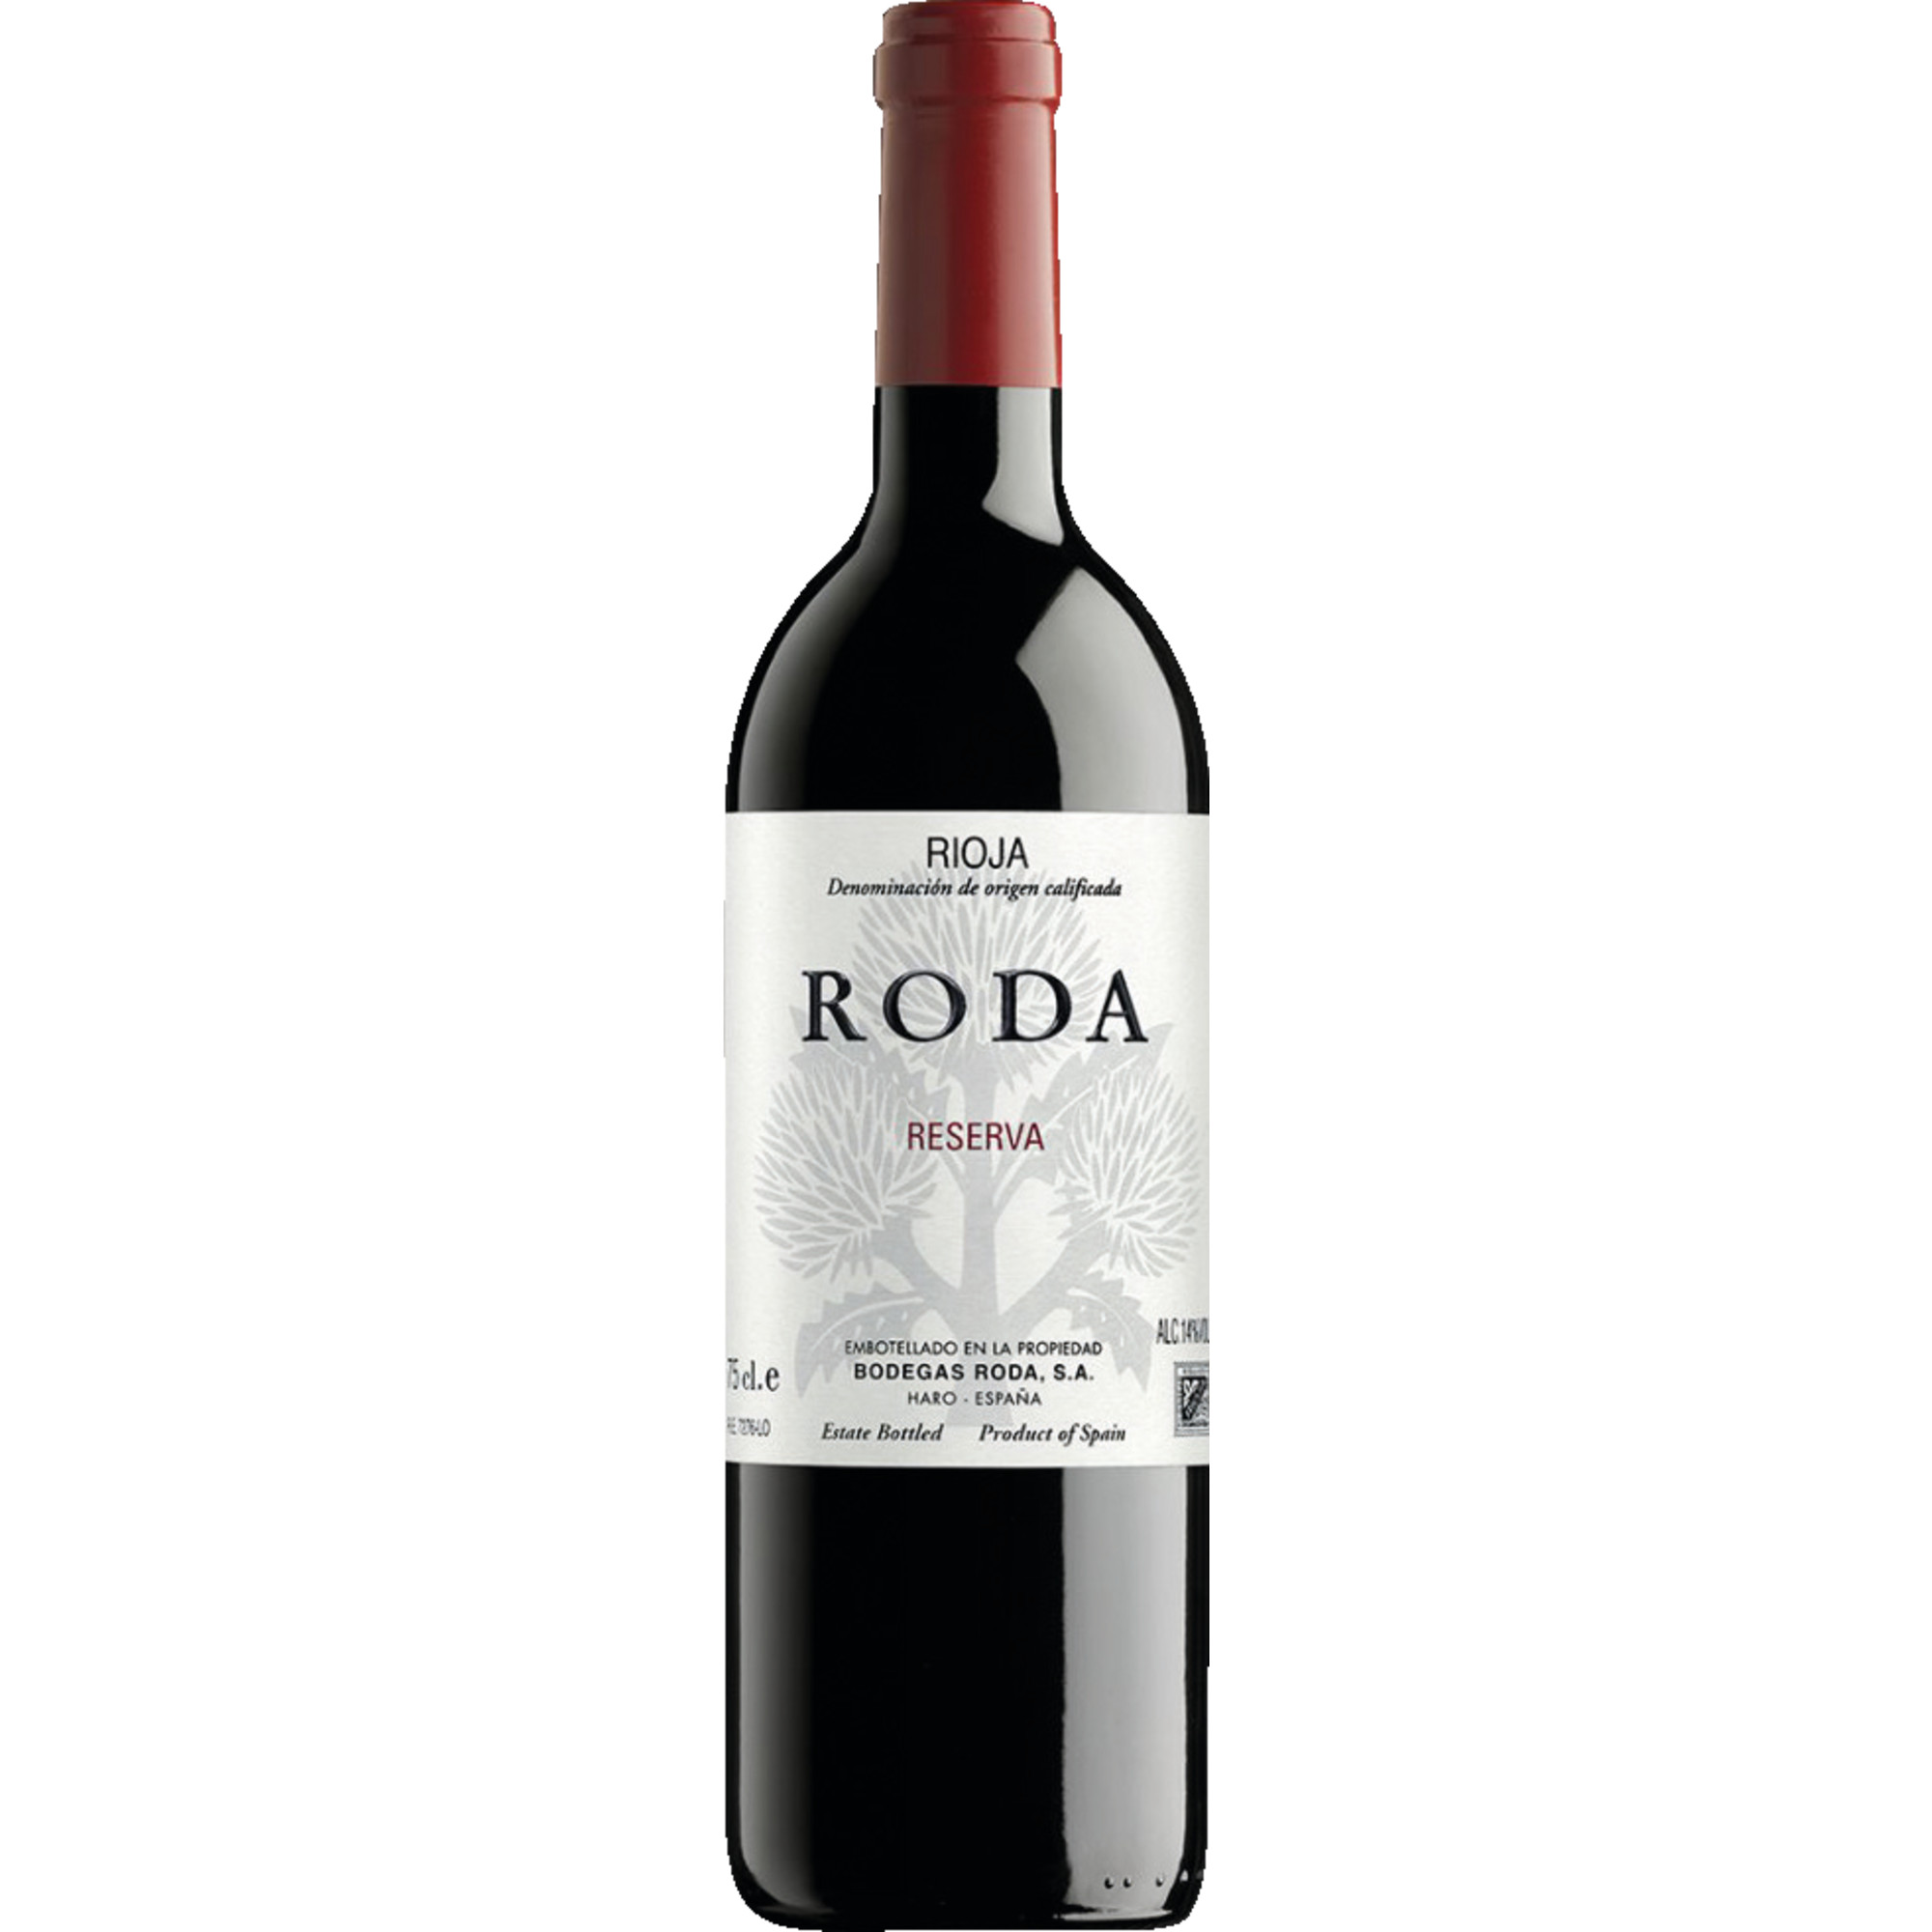 2019 Roda Rioja Reserva